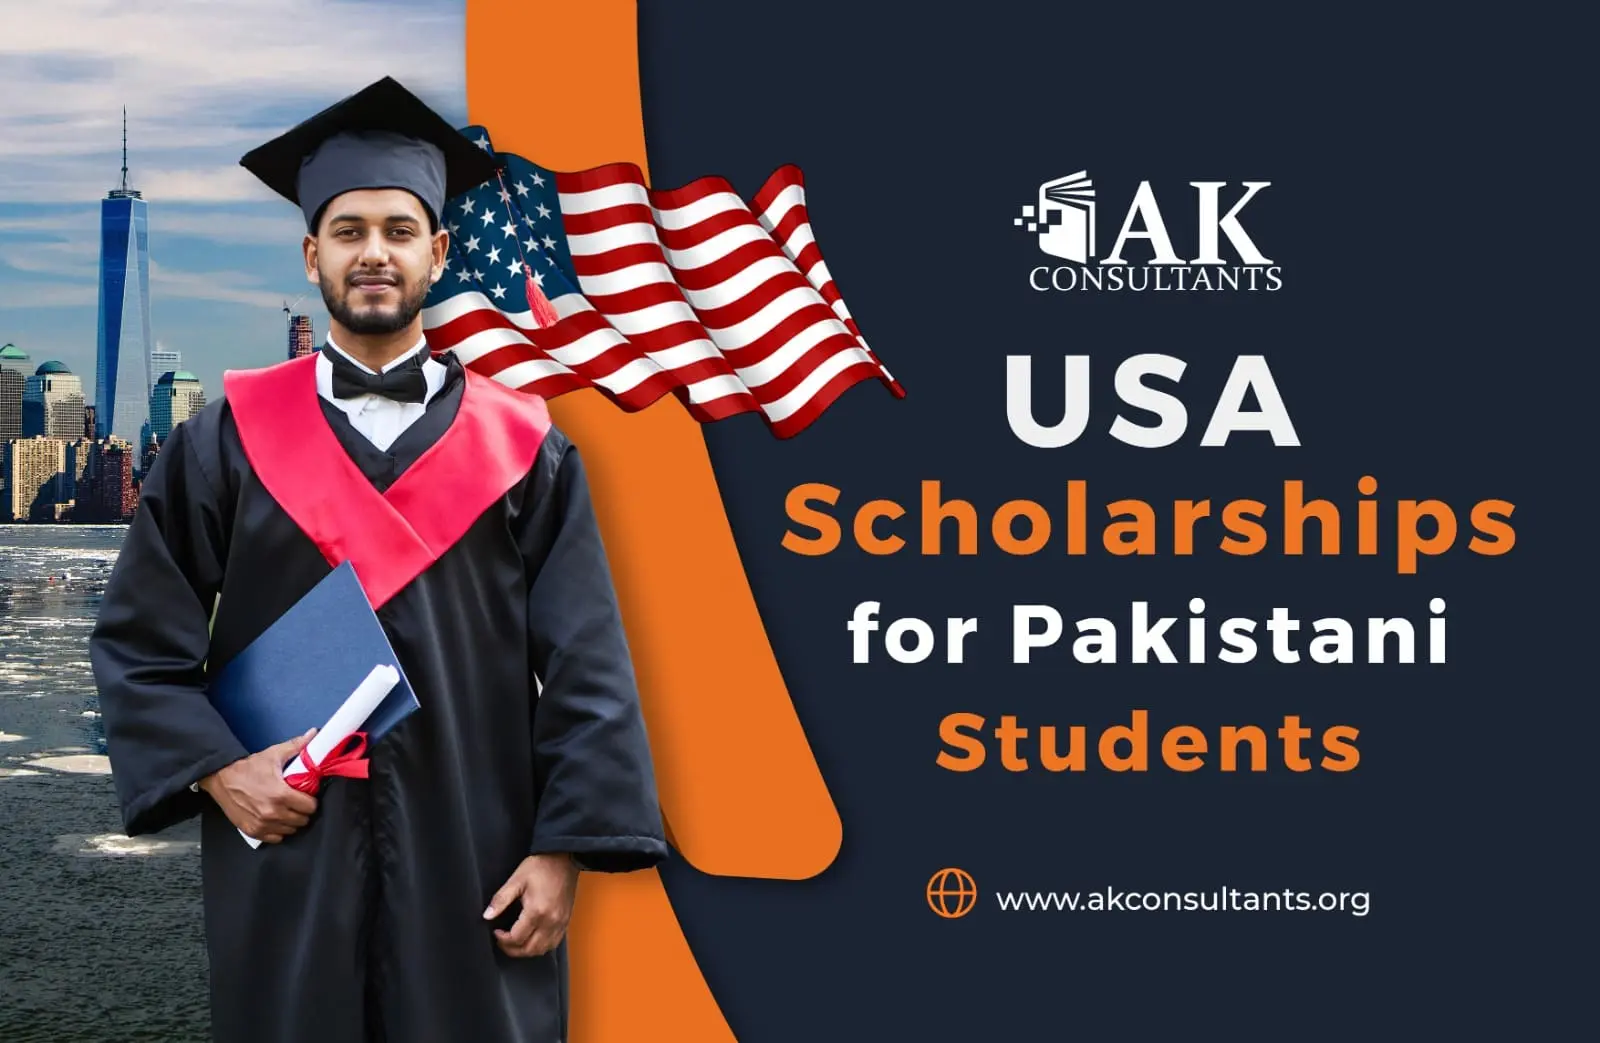 USA Scholarships for Pakistani Students